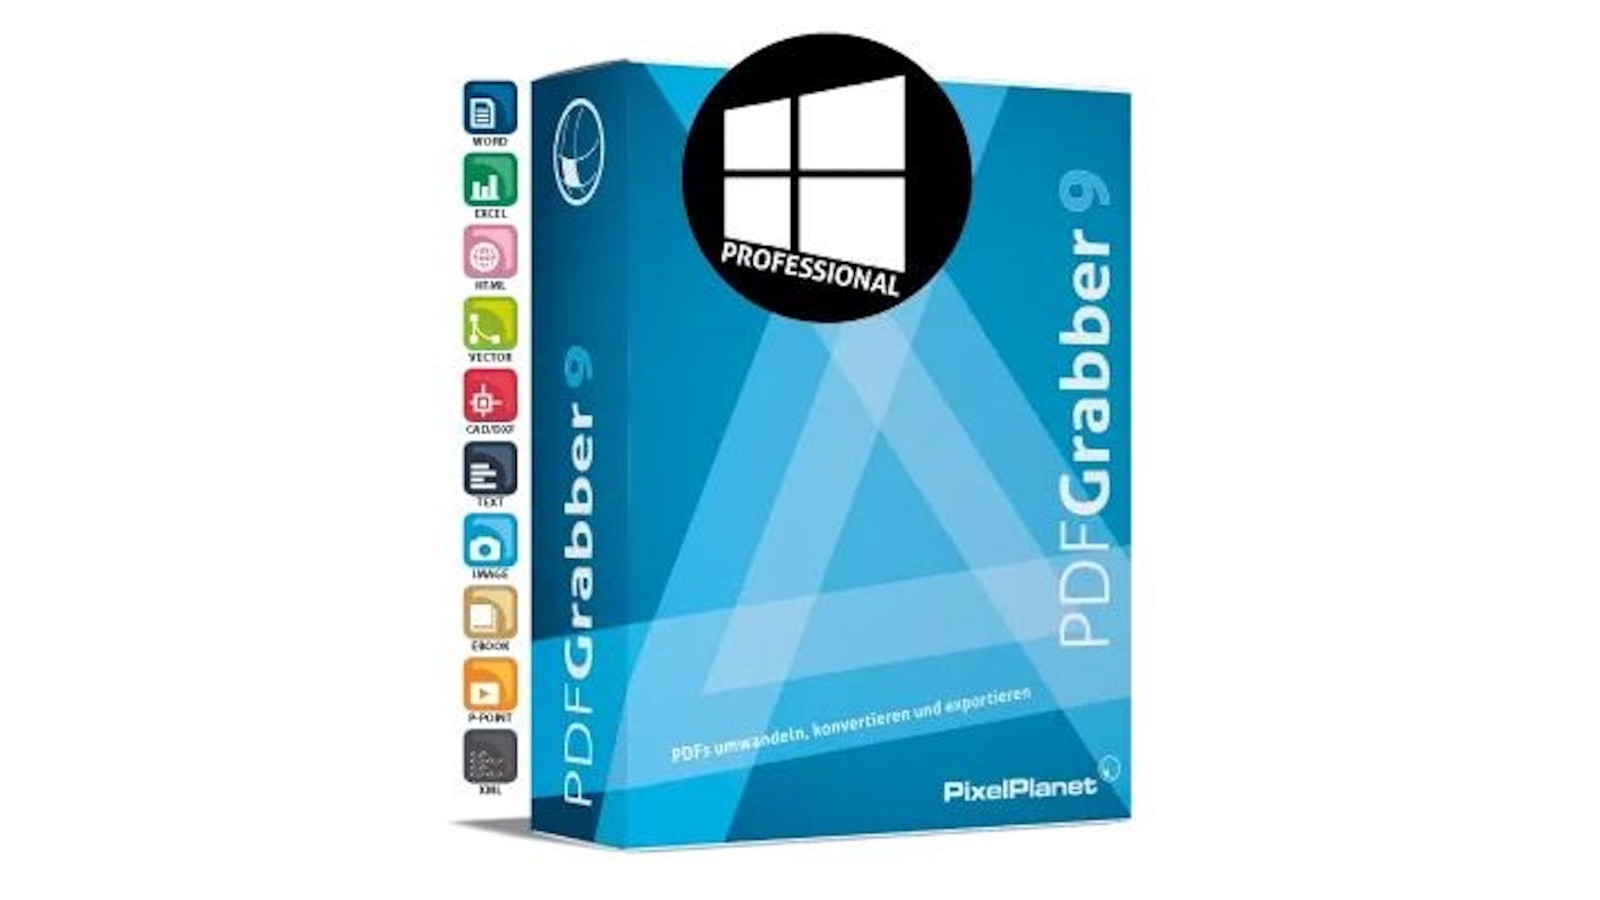 PixelPlanet PdfGrabber 9 Professional Network Licence Key (Lifetime / 5 Users) 7.74$